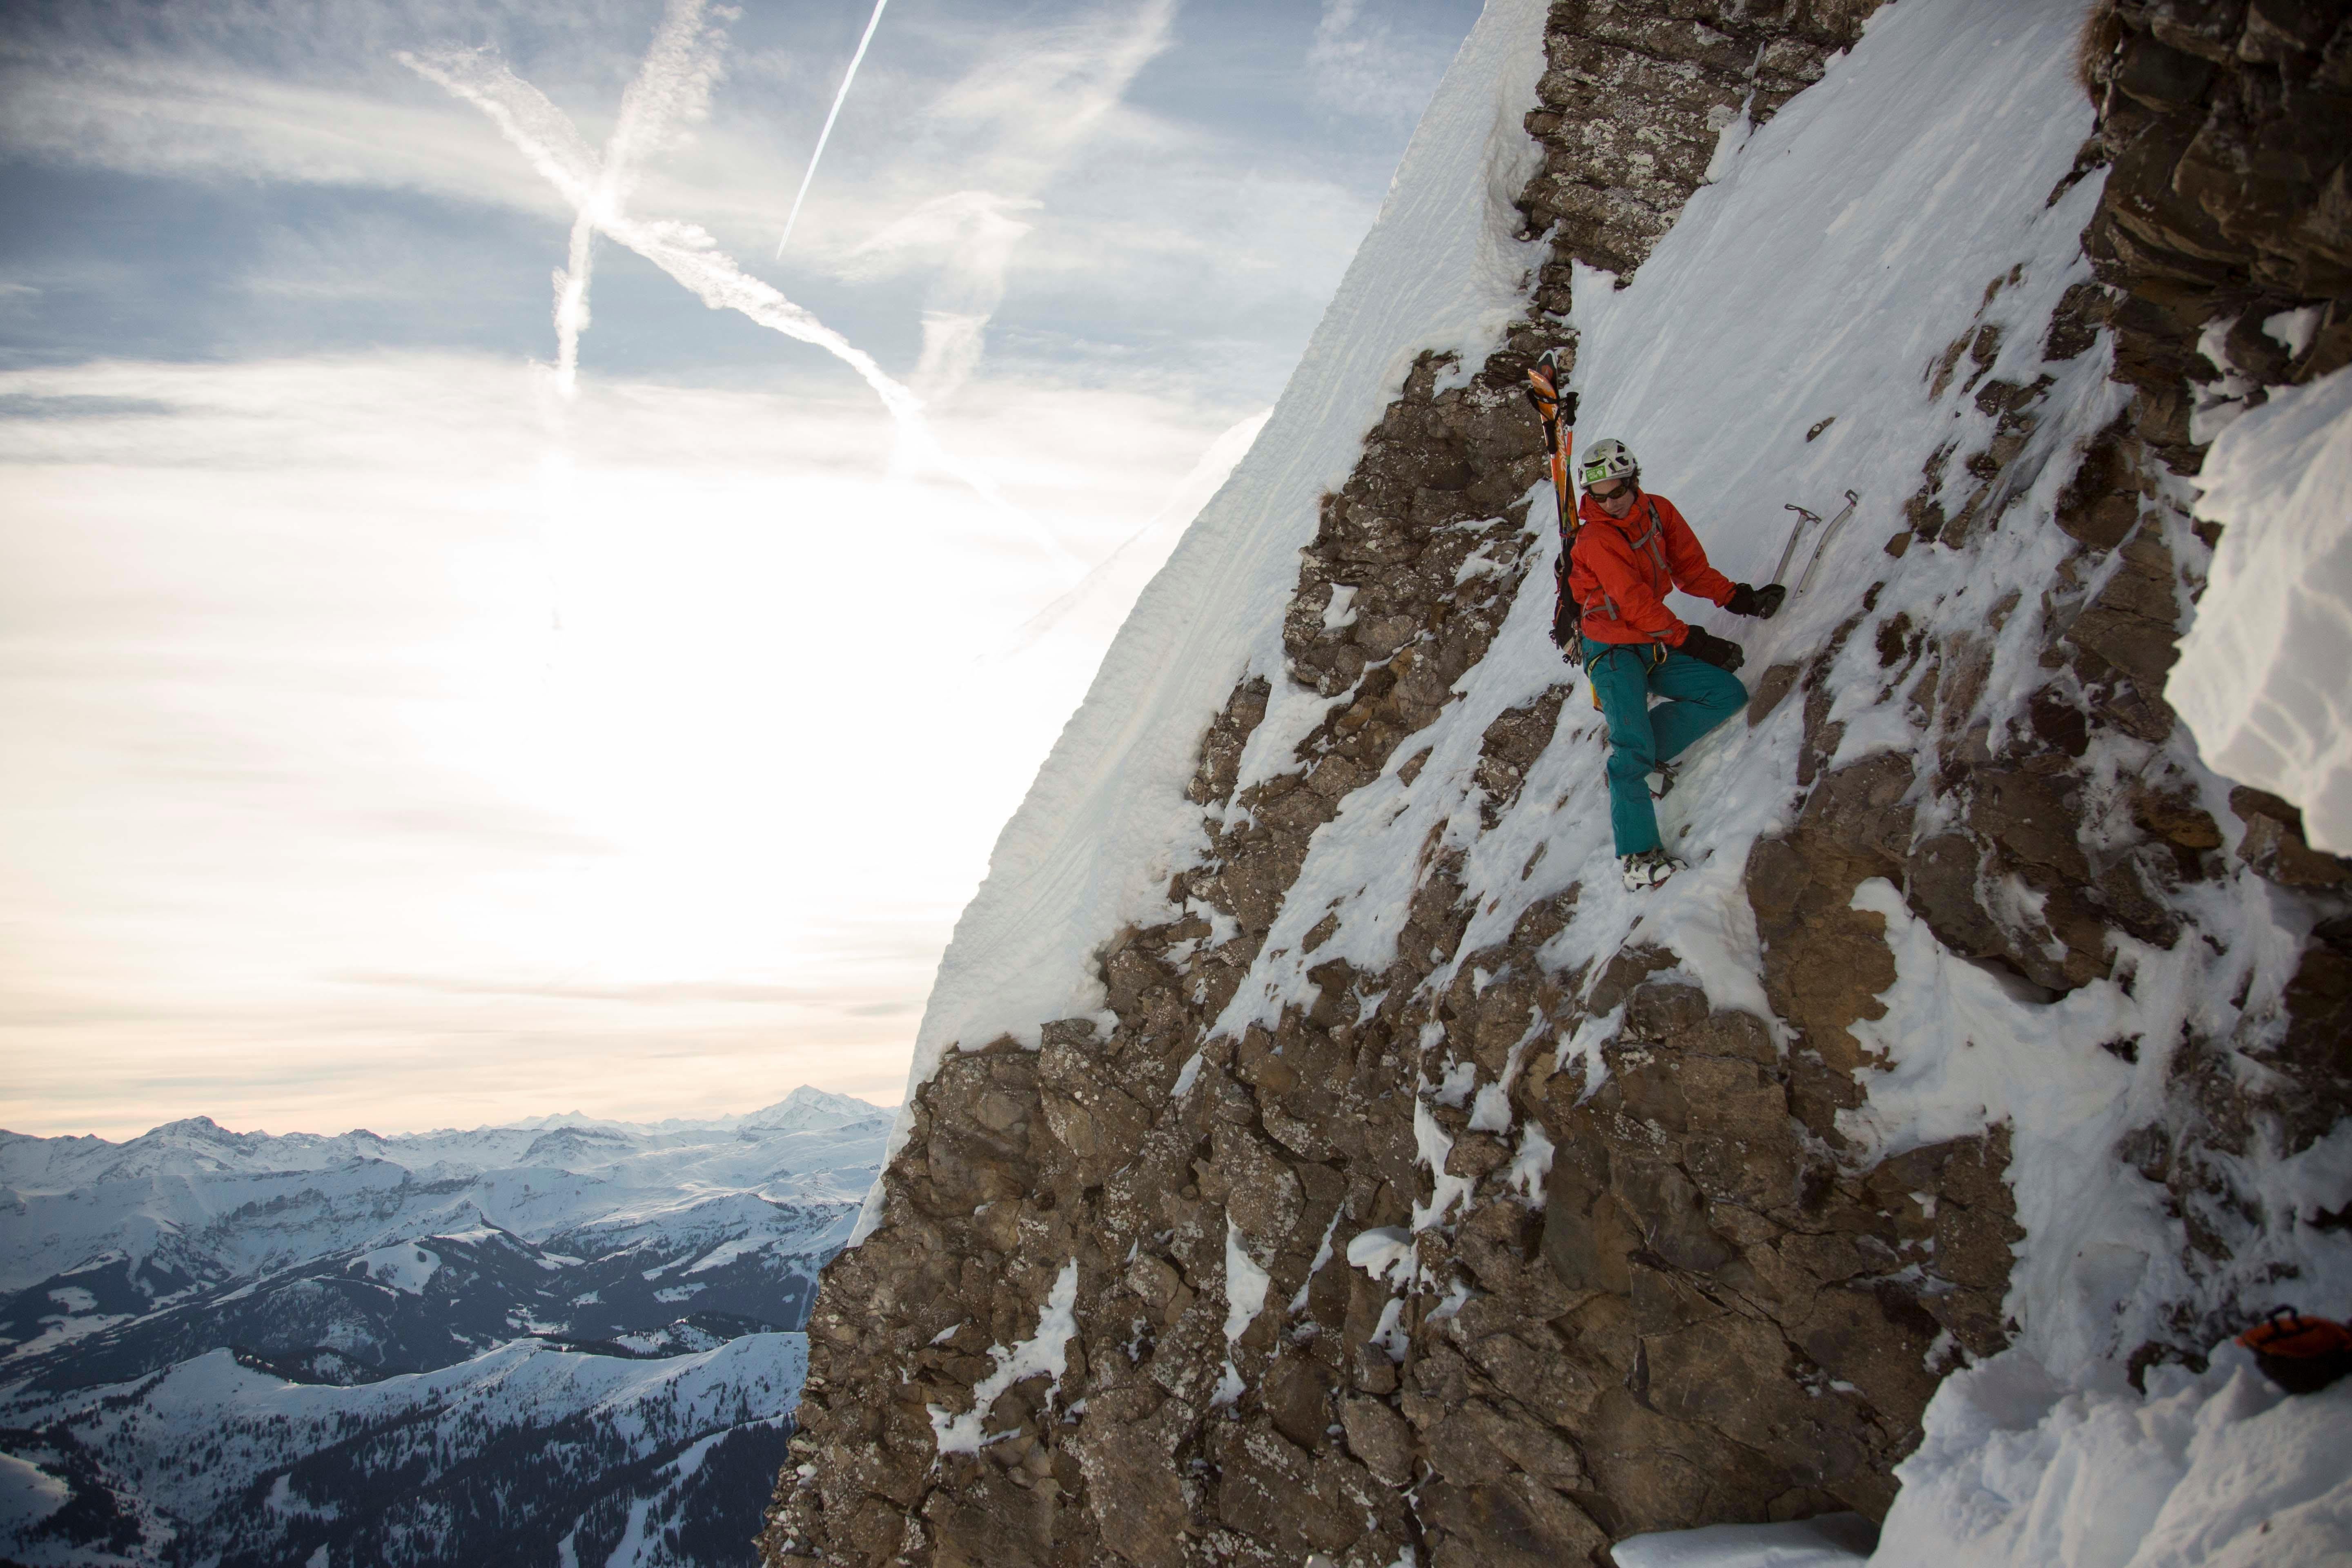 Extreme steep skiing in the Alps - Sebastien Montaz